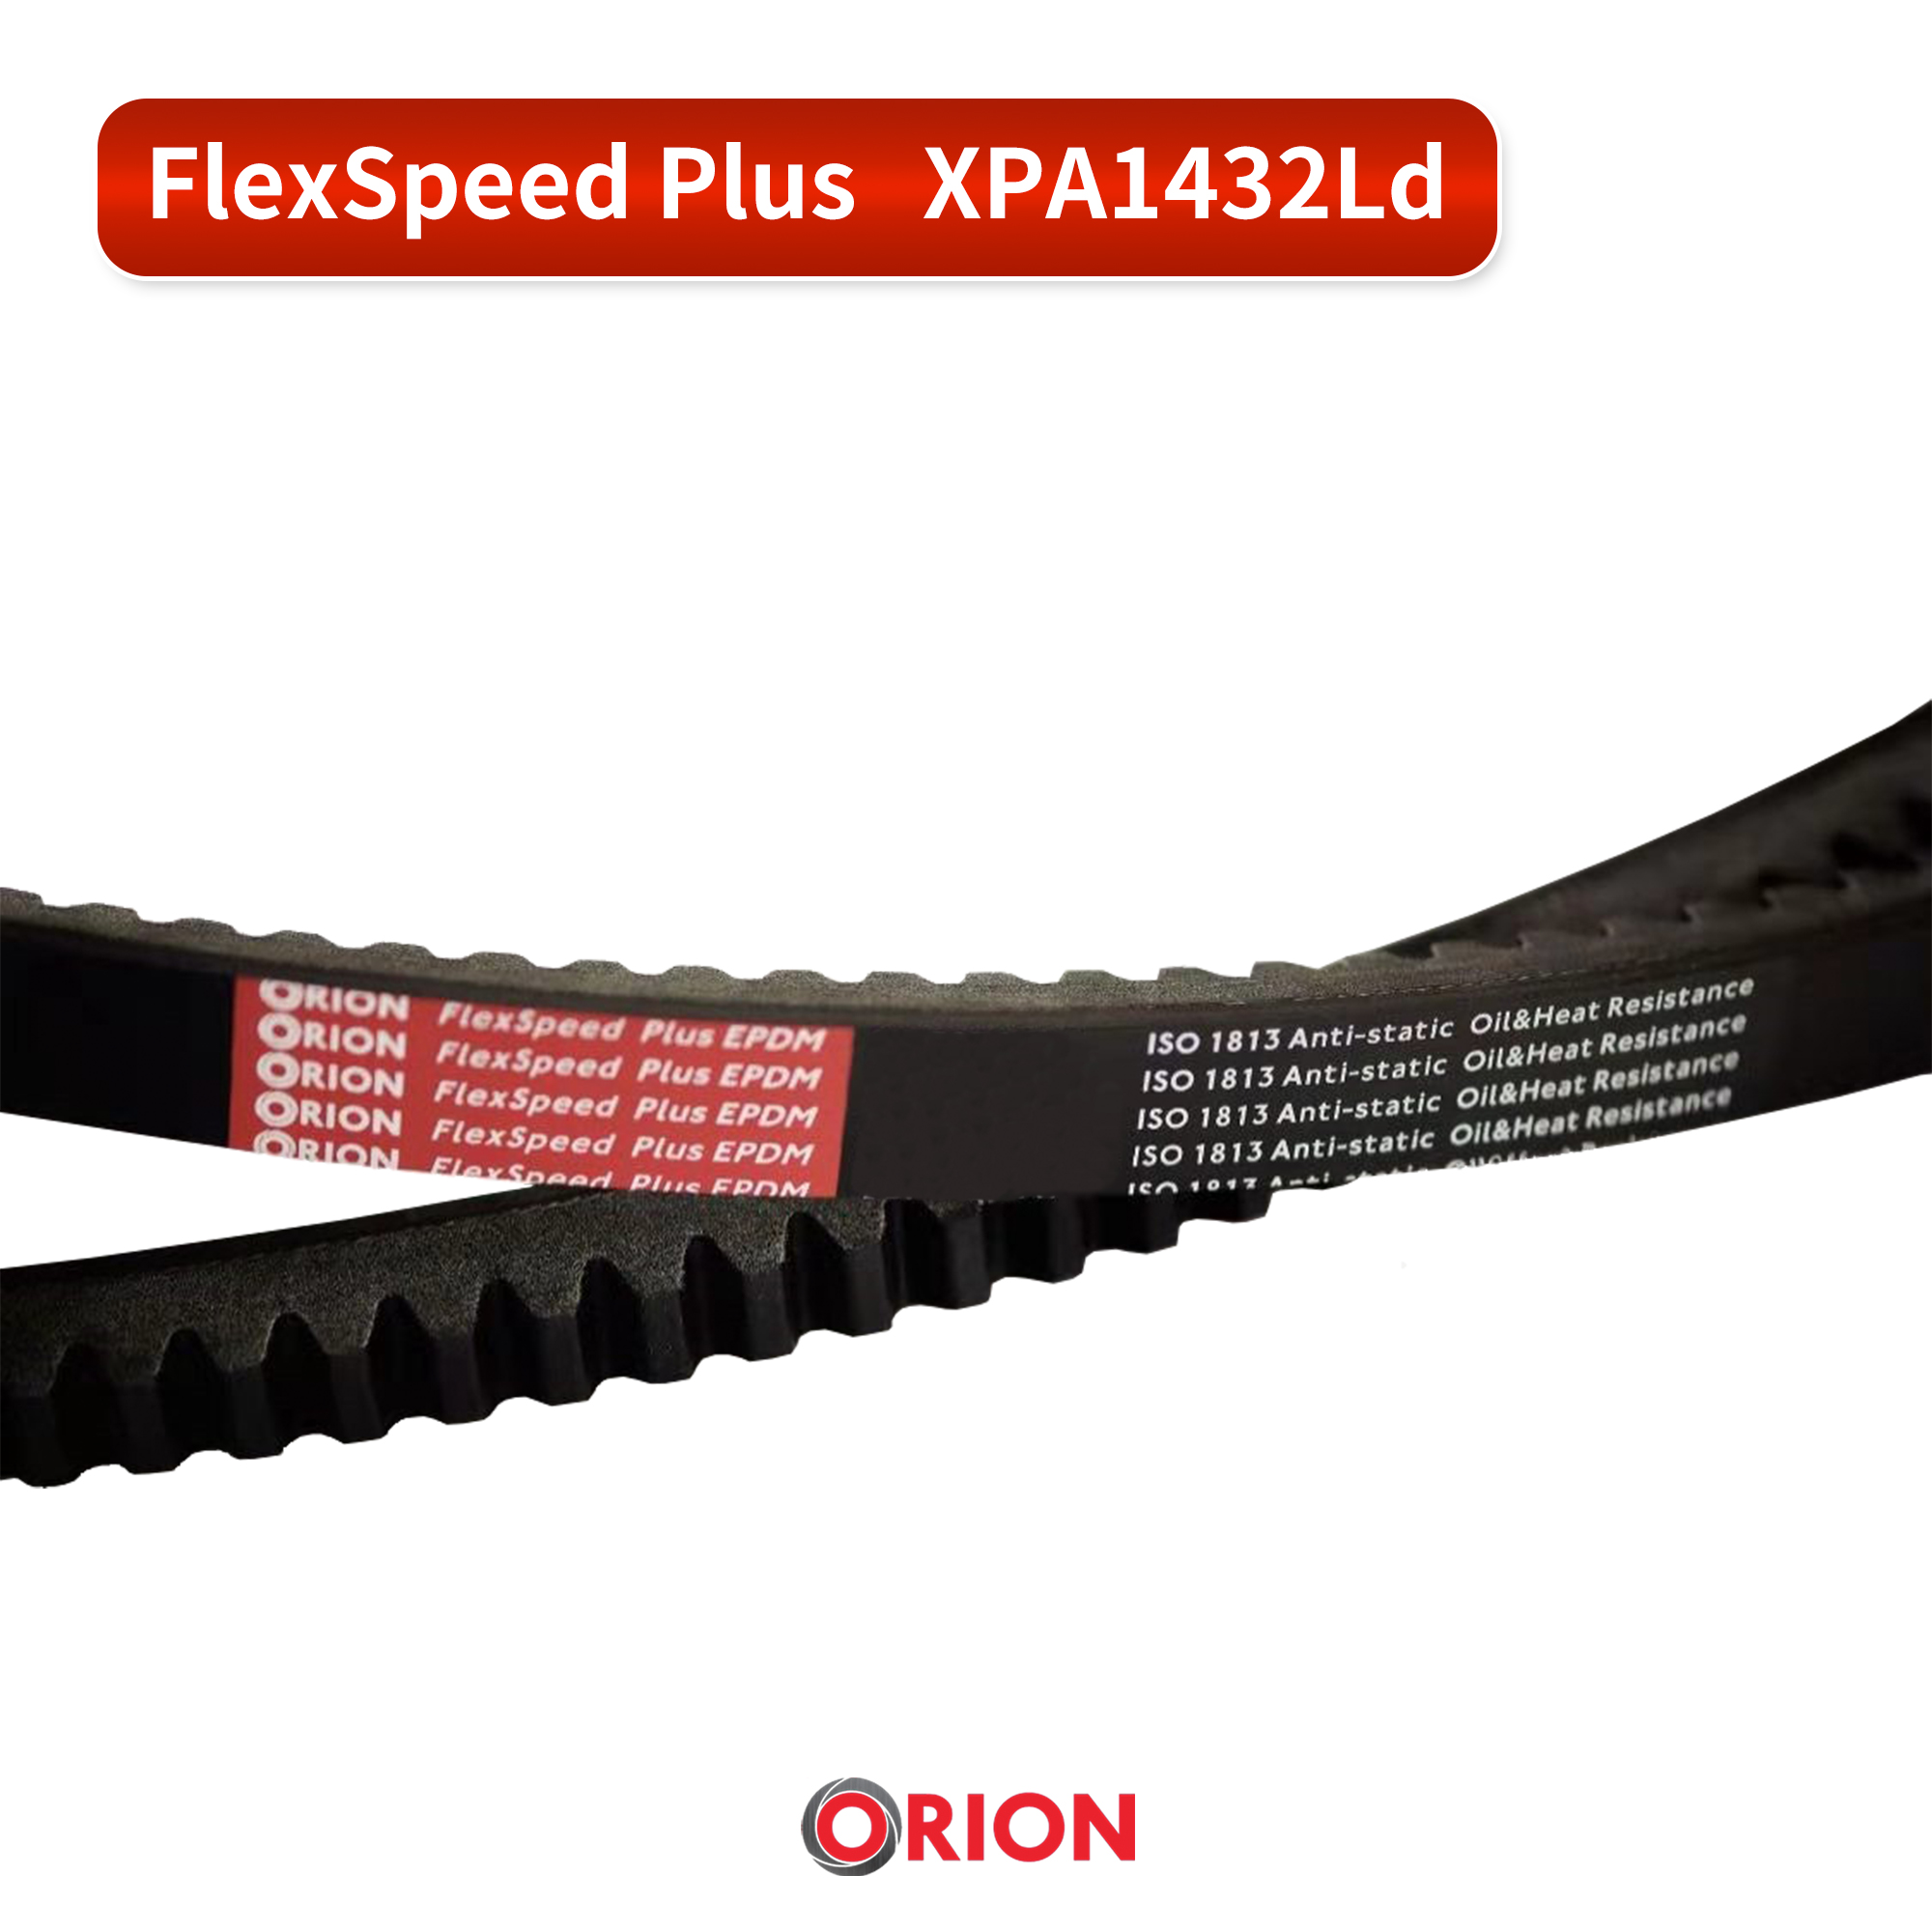 ORION FlexSpeed Plus XPA1432 Ld （红标） 